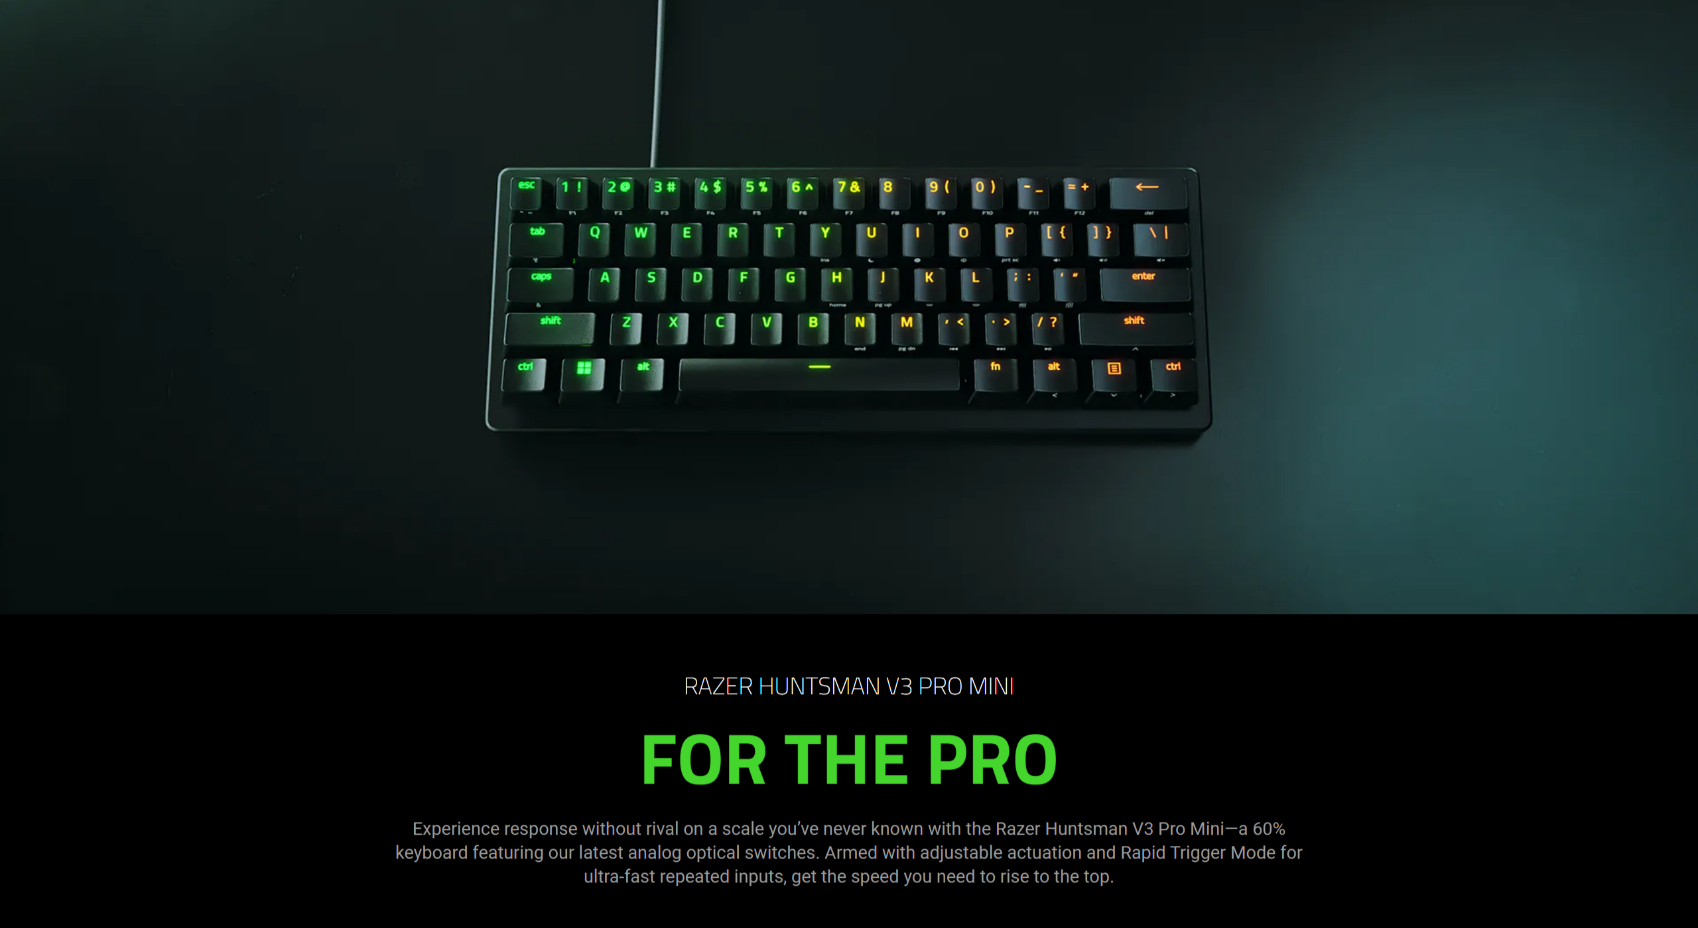 A large marketing image providing additional information about the product Razer Huntsman V3 Pro Mini - 60% Analog Optical eSports Keyboard (Black) - Additional alt info not provided